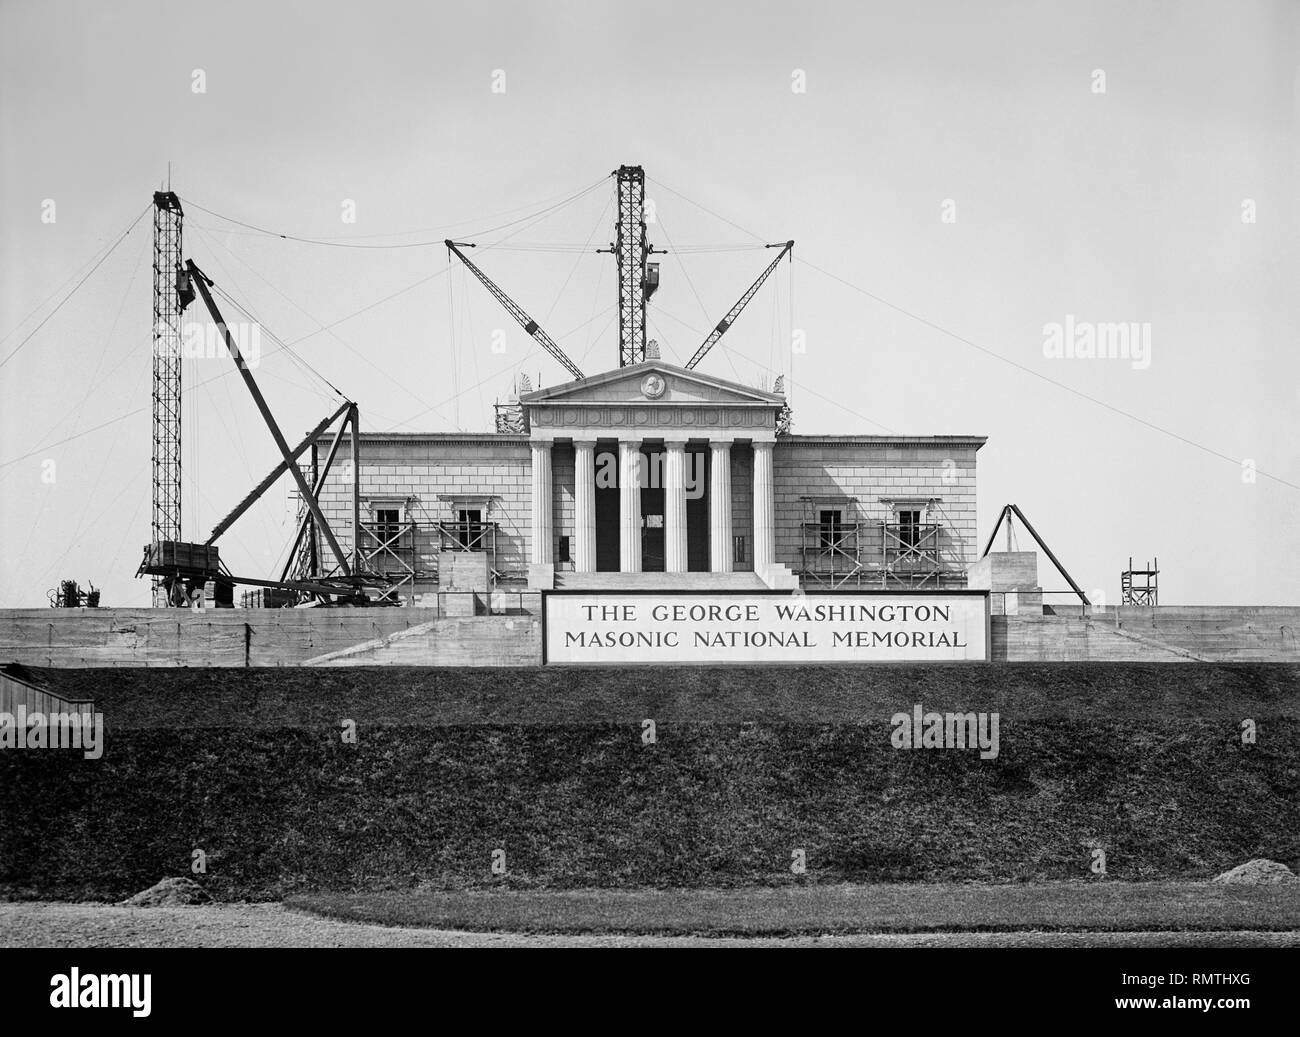 George Washington Masonic National Memorial in costruzione, ad Alexandria, Virginia, Stati Uniti d'America, Harris & Ewing, 1925 Foto Stock